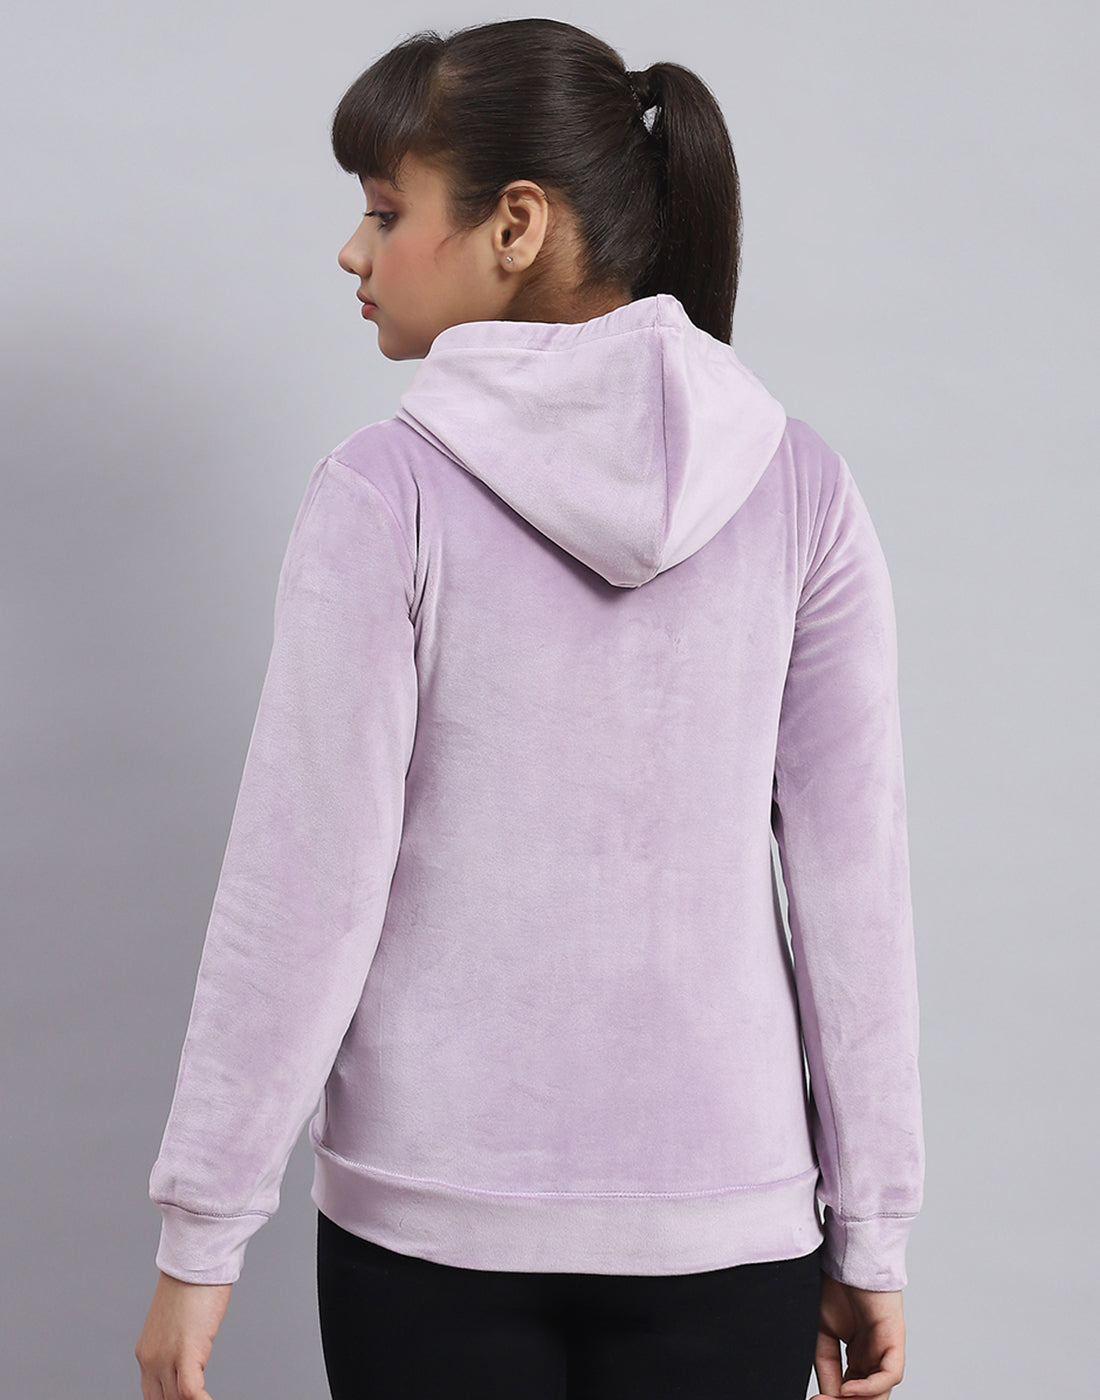 Girls Purple Solid Hooded Full Sleeve Sweatshirt